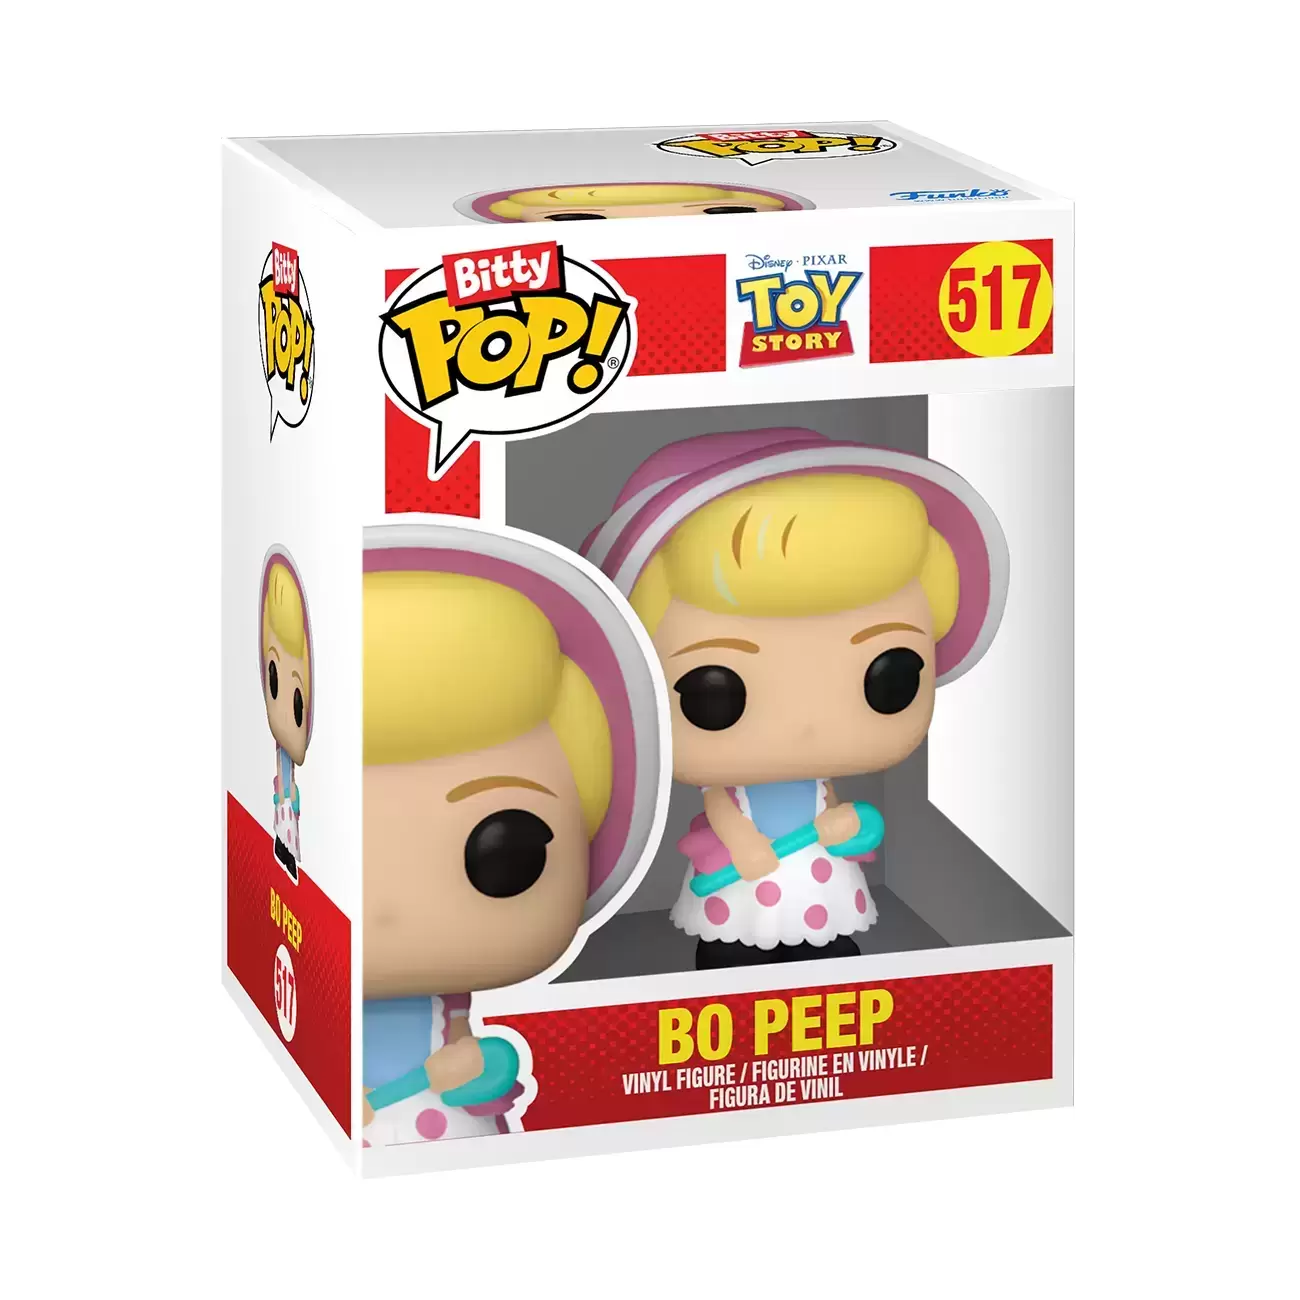 Toy Story - Bo Peep - Bitty POP! action figure 517